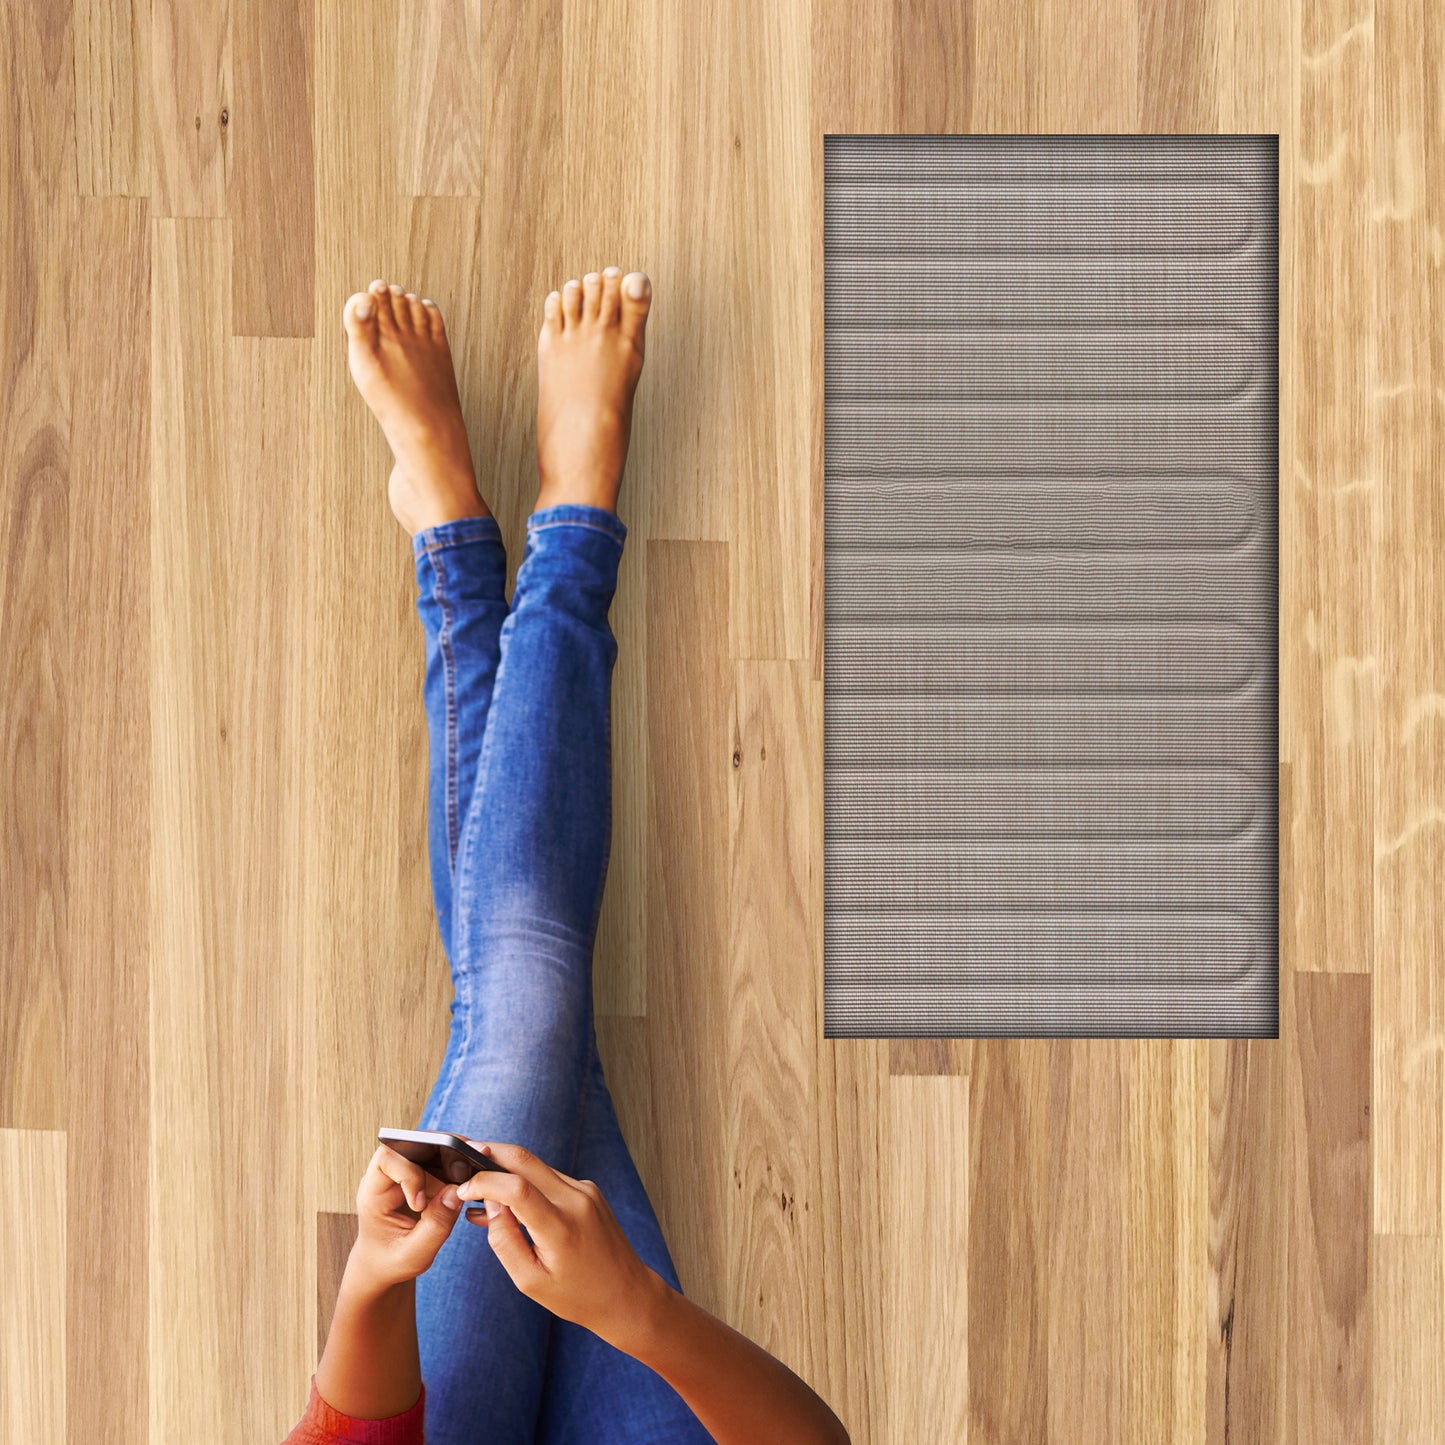 KLIMA 1.0m2 to 10m2 Underwood Heating Foil Mat For Wooden & Laminate Floorings